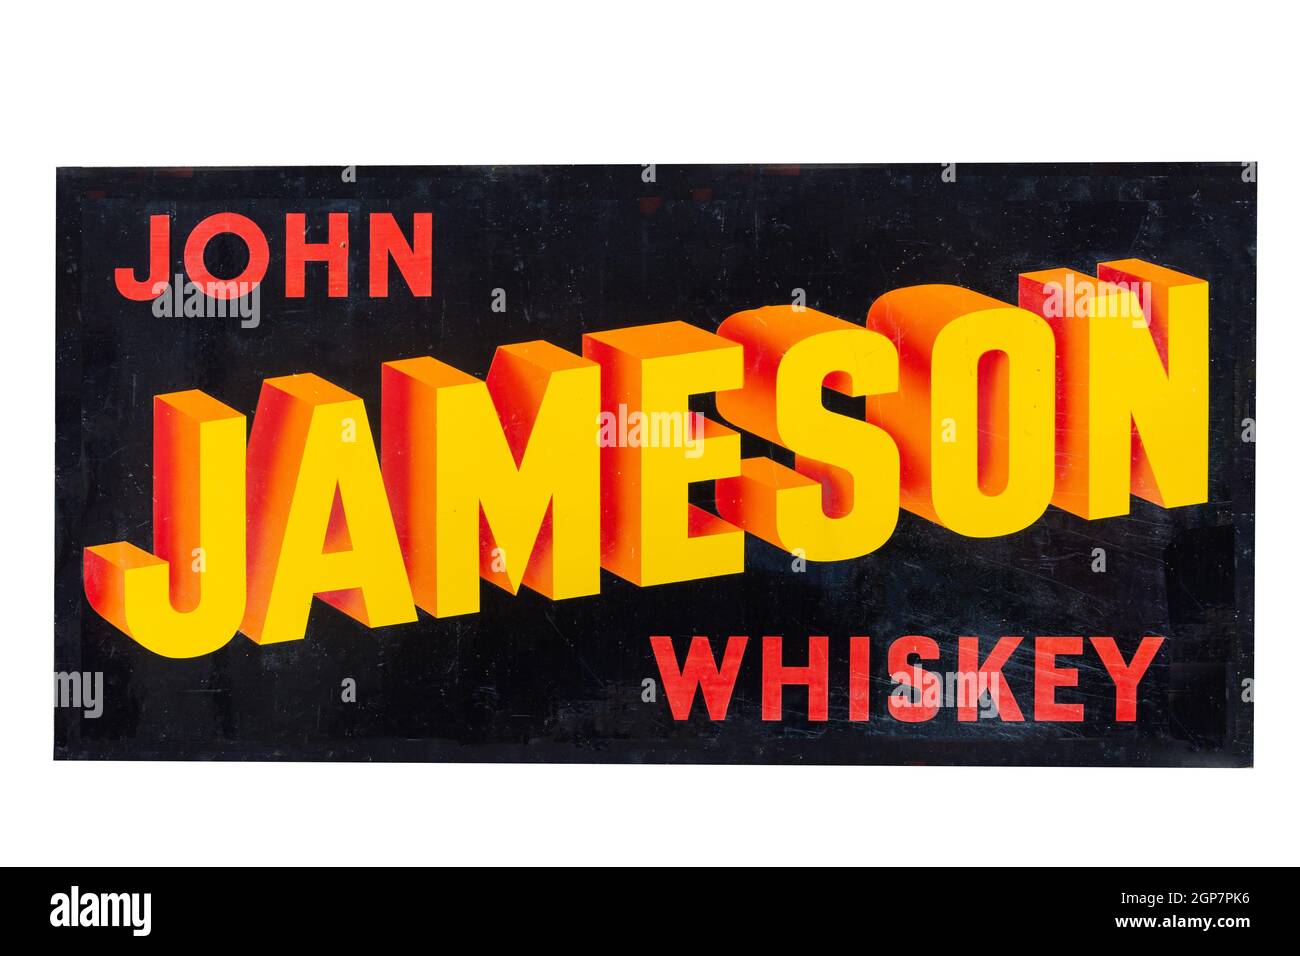 Vintage advertising sign at Old Jameson Whiskey Distillery Midleton, Distillery Walk, Midleton (Mainistir na Corann), County Cork, Repubblica d'Irlanda Foto Stock